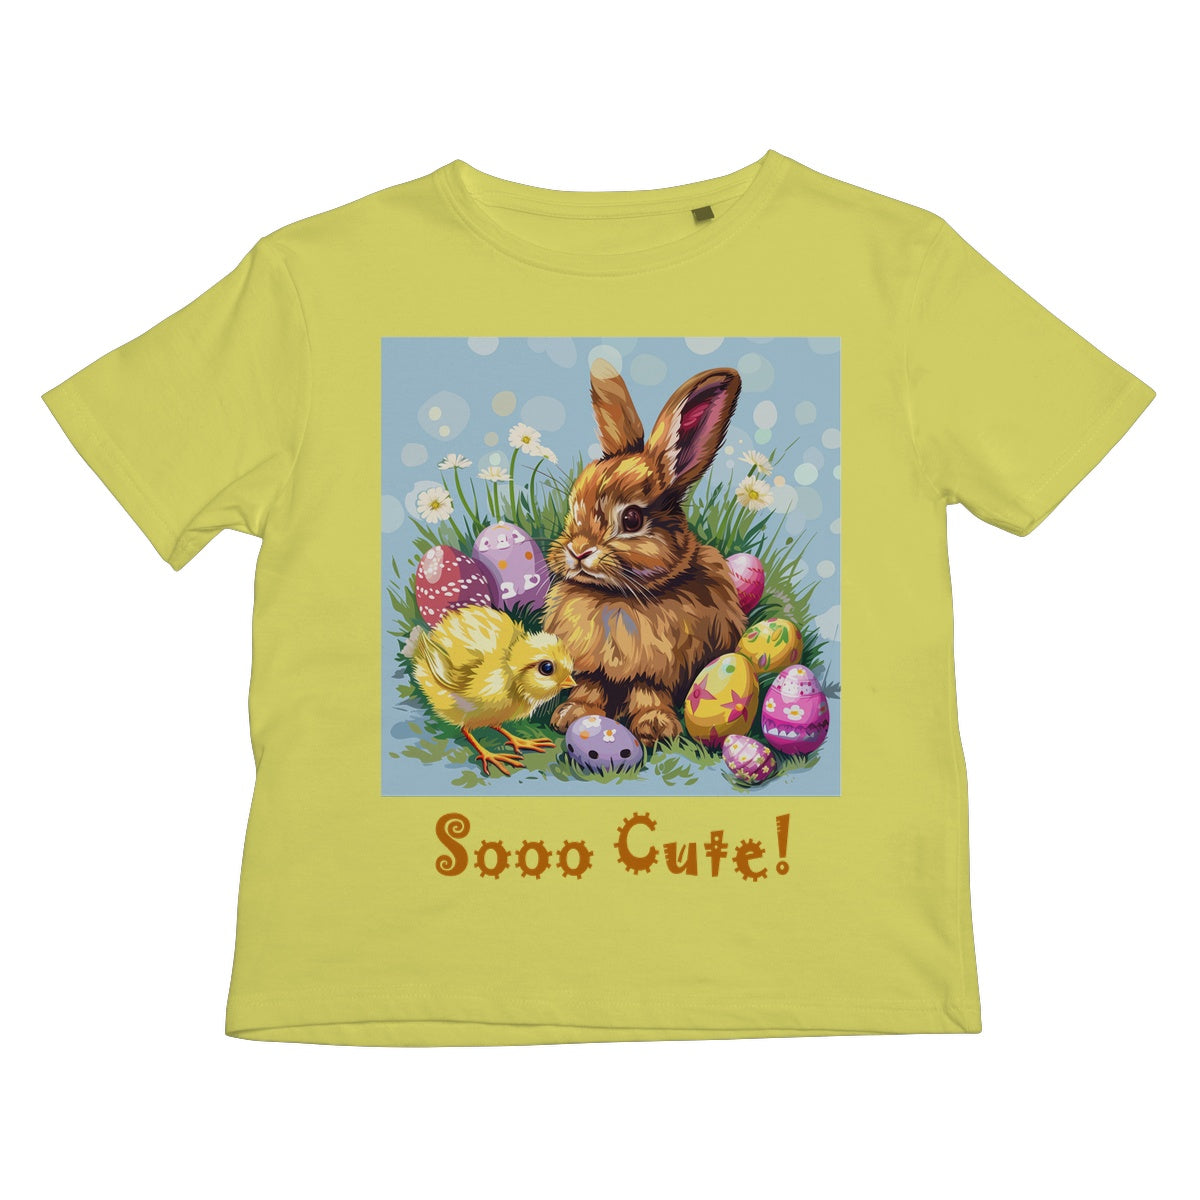 Sooo Cute! Kids' T-Shirt